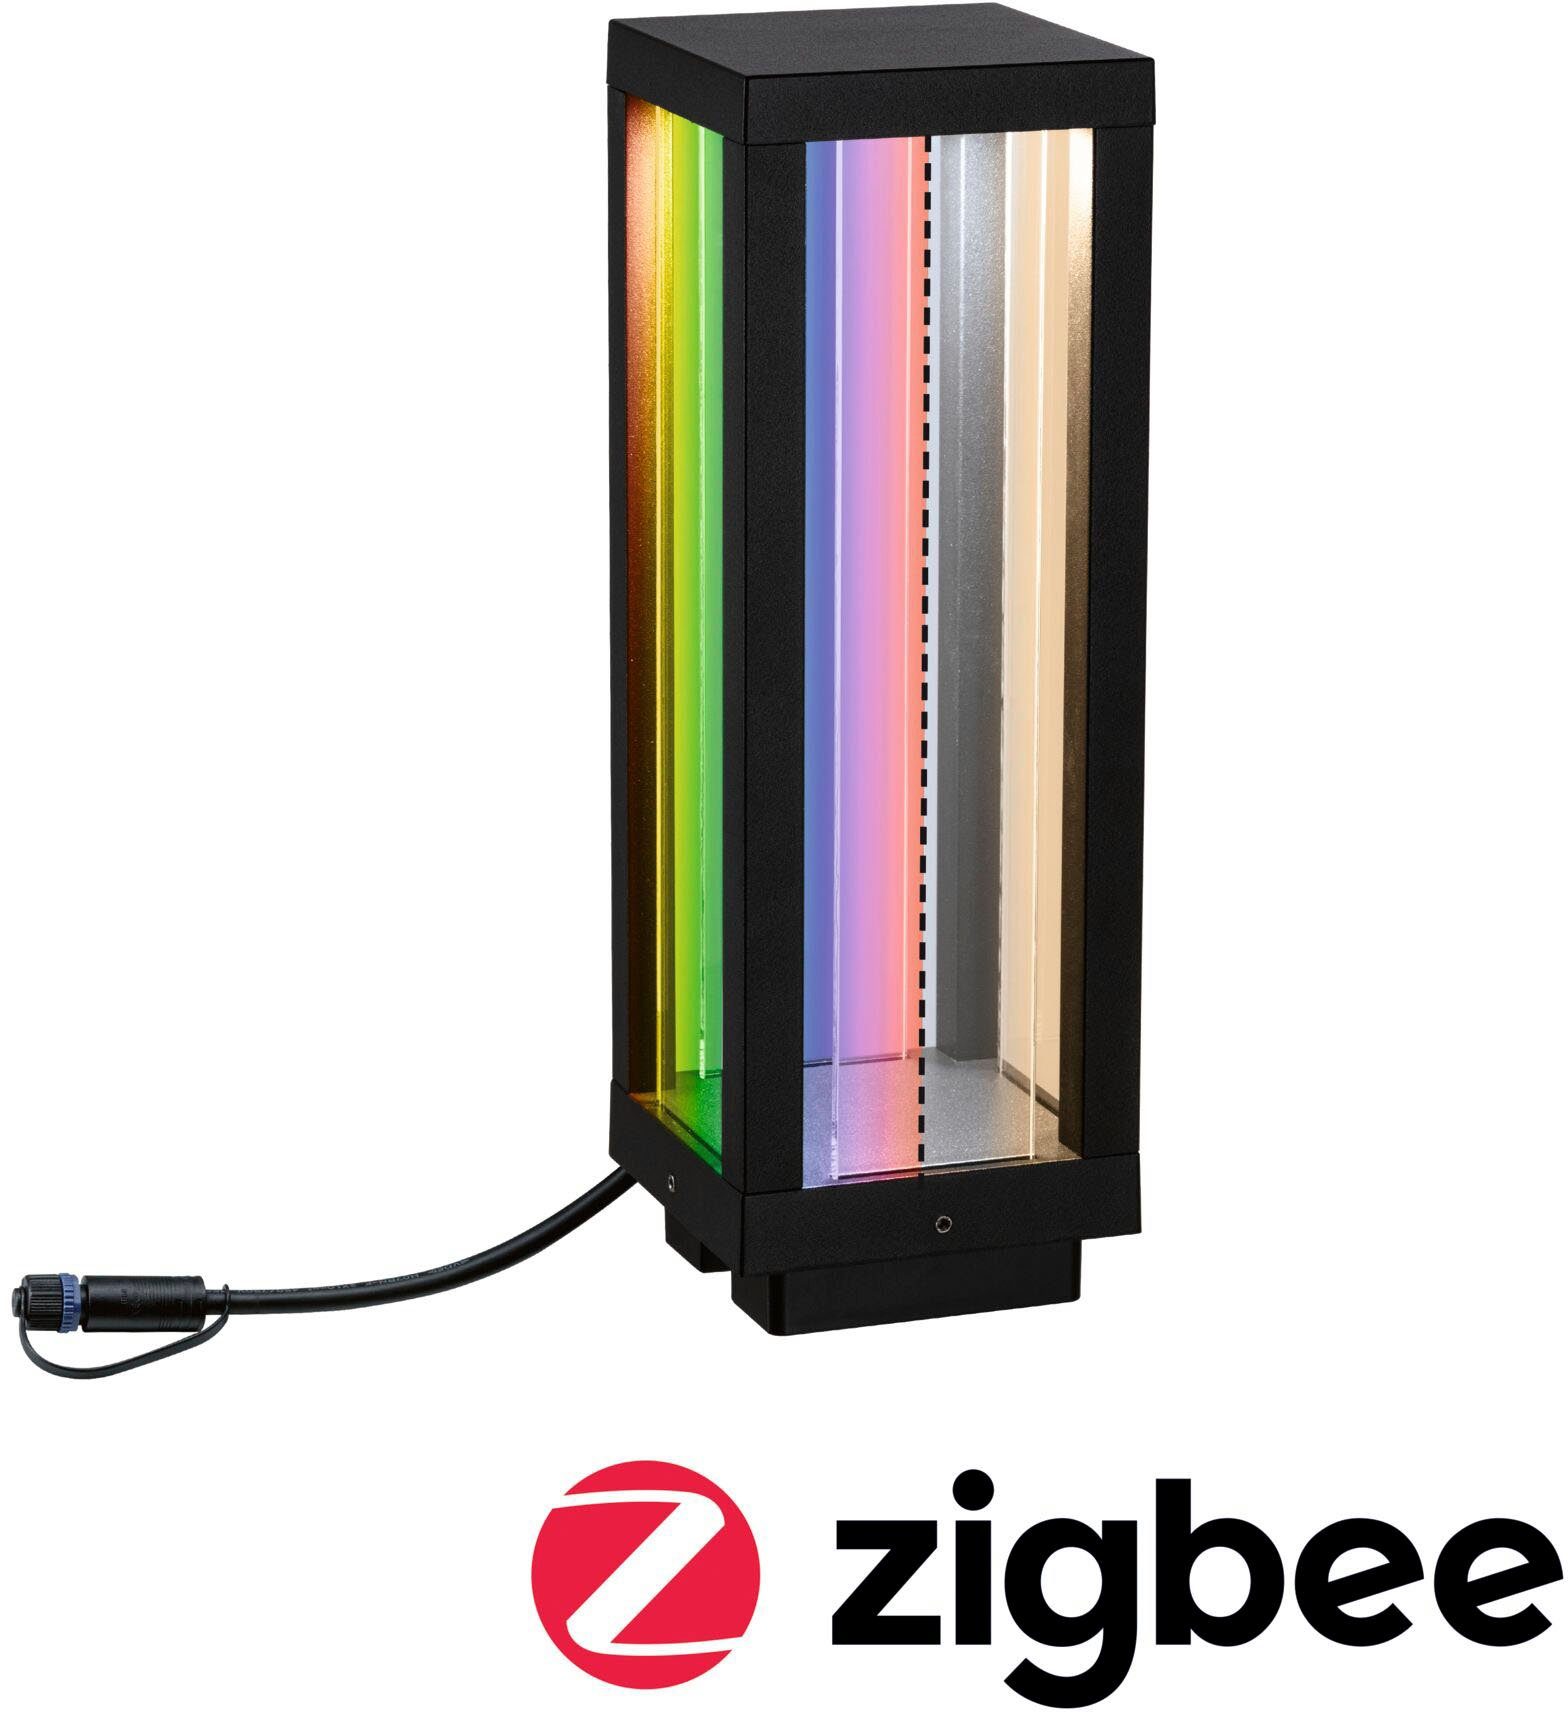 & Outdoor LED Paulmann Plug IP44 RGBW, ZigBee Shine Warmweiß, Gartenleuchte Classic 30 ZigBee Lantern IP44 RGBW